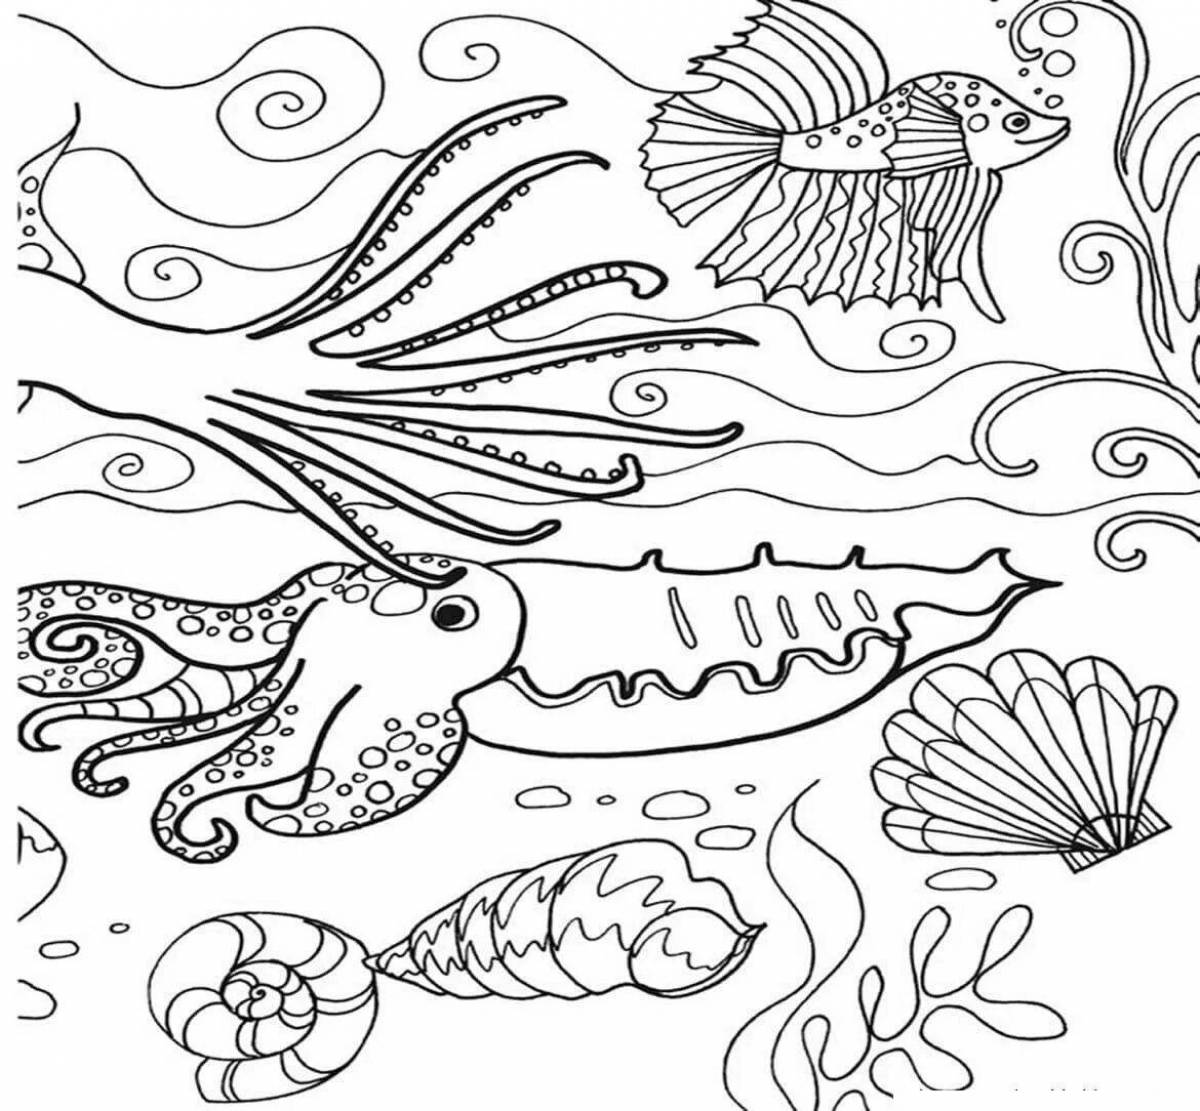 Adorable marine life coloring book